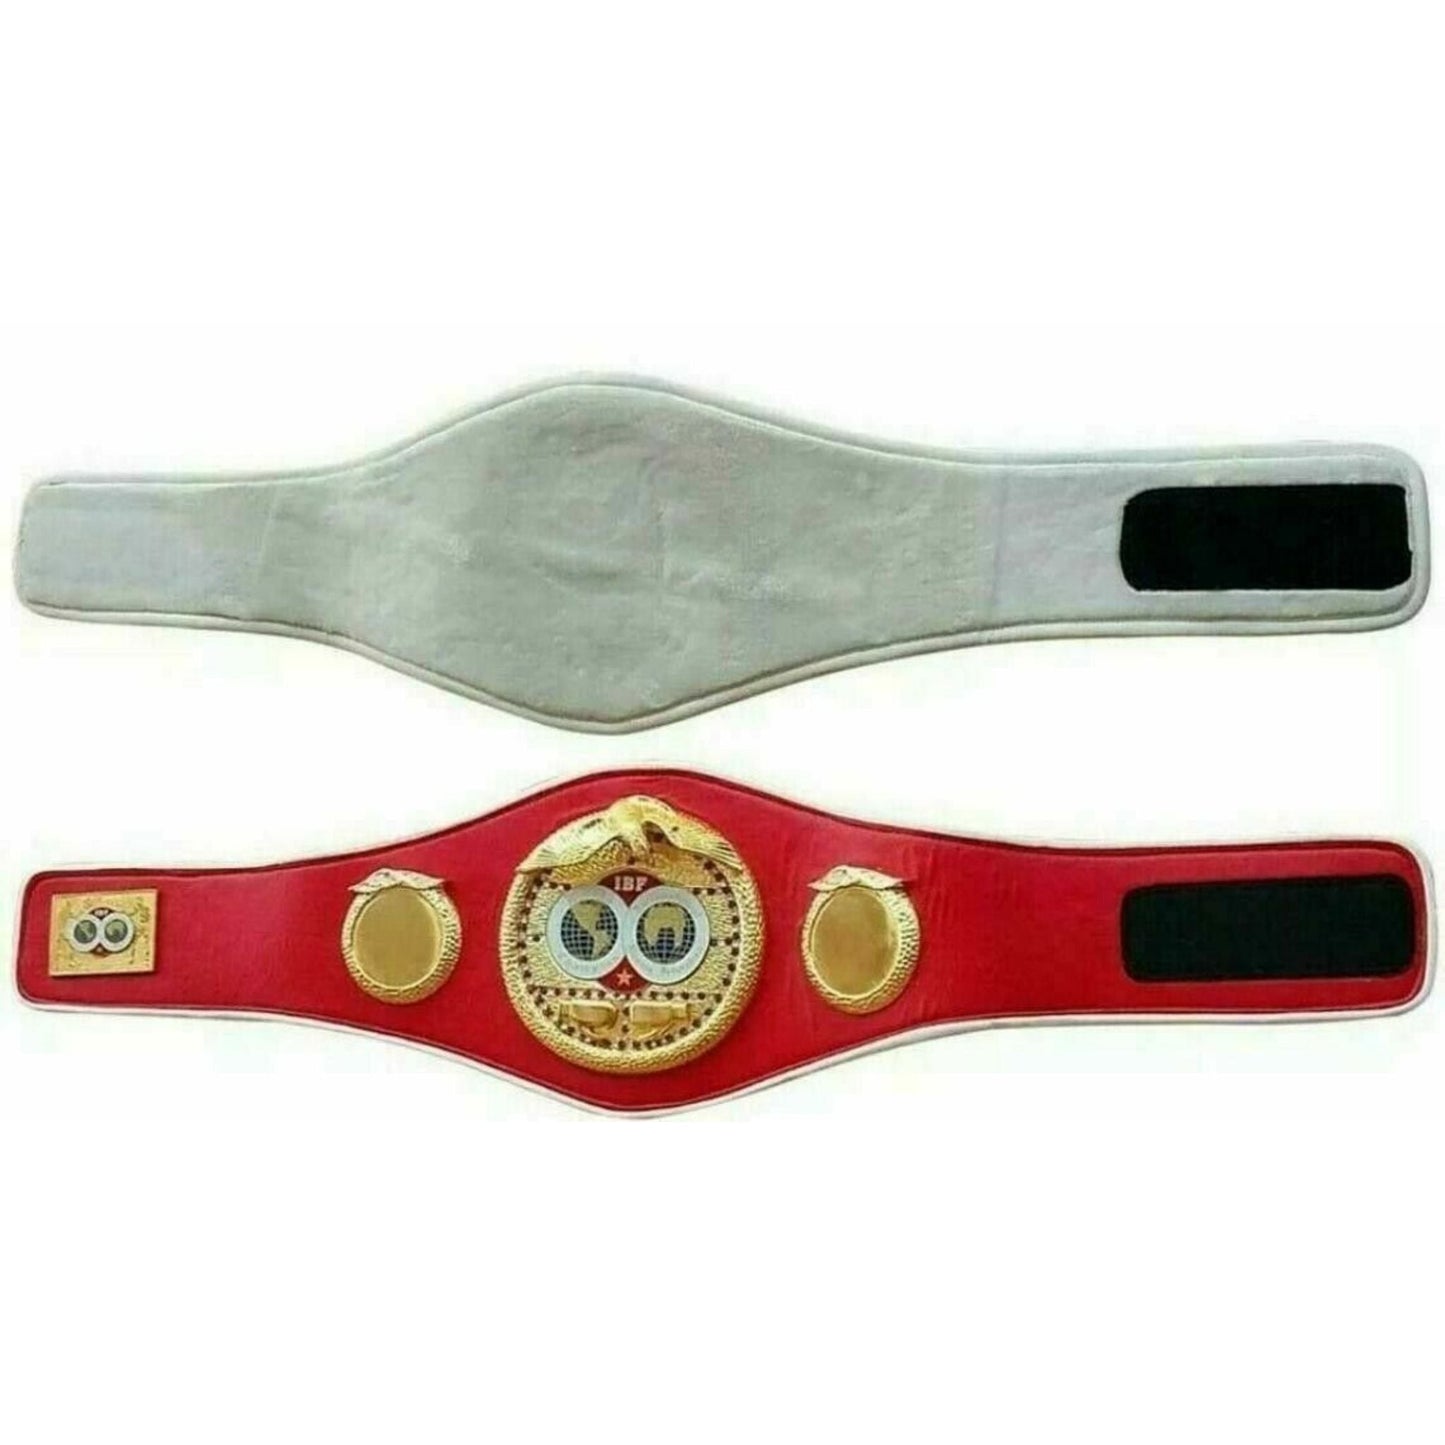 IBF (International Boxing Federation) Boxing Championship Replica Belt Adult size